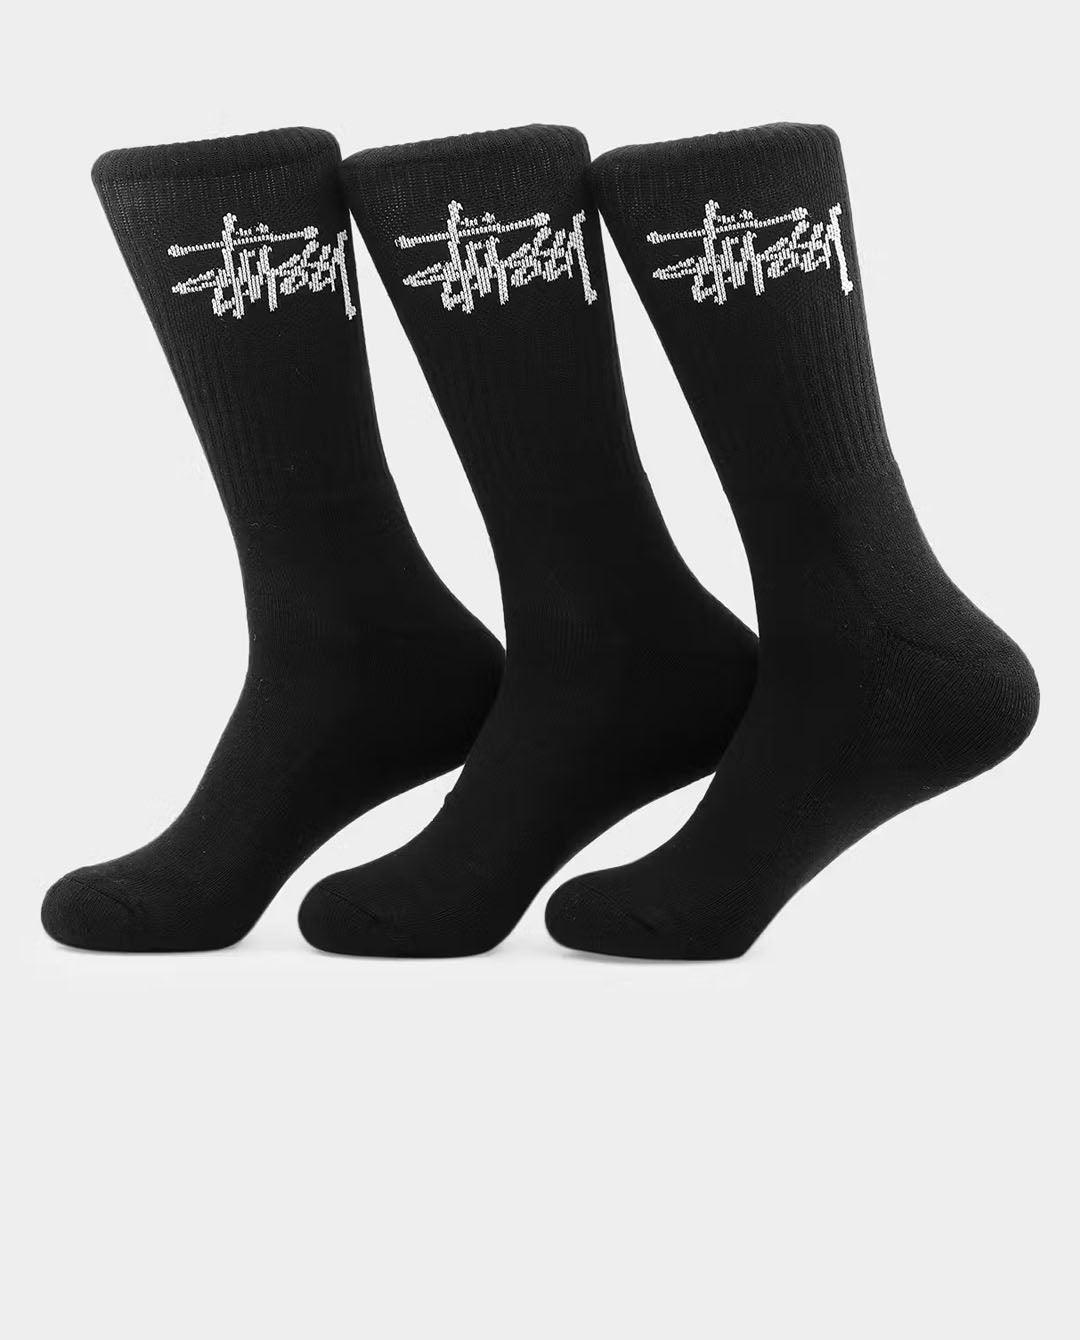 Stussy - Graffiti Crew Sock 3 Pack - Black Socks Stussy   